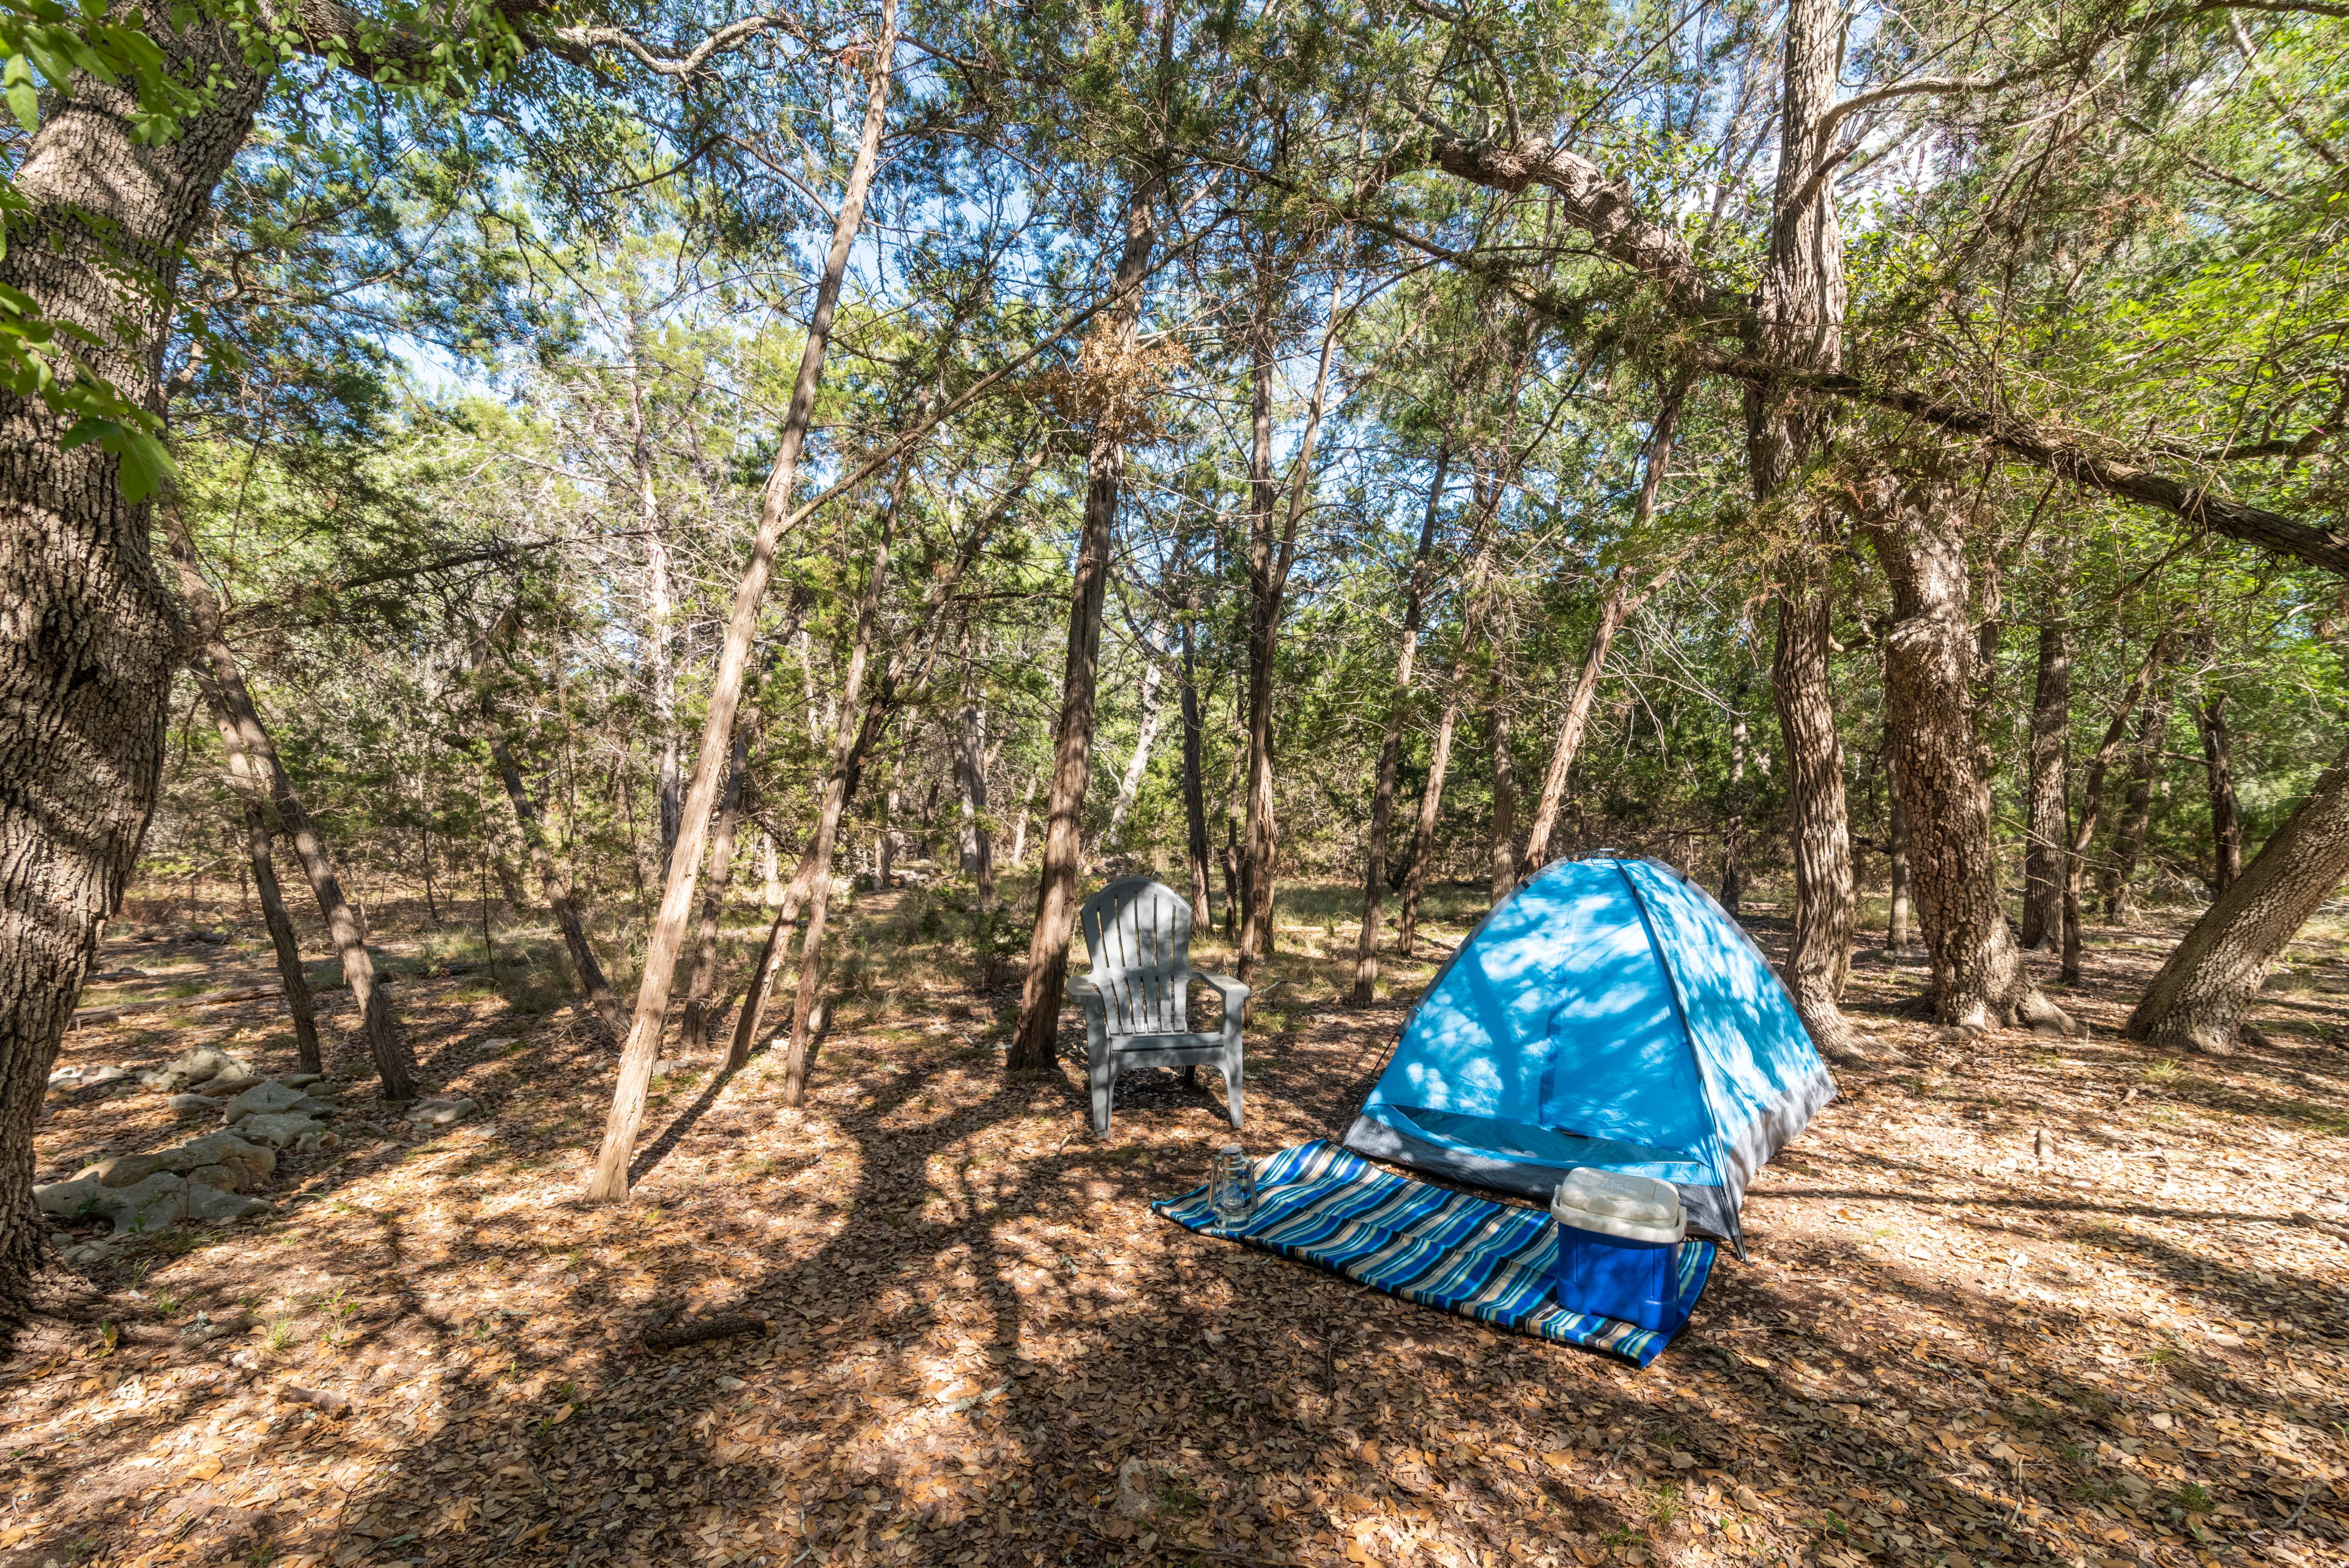 Primitive camping area